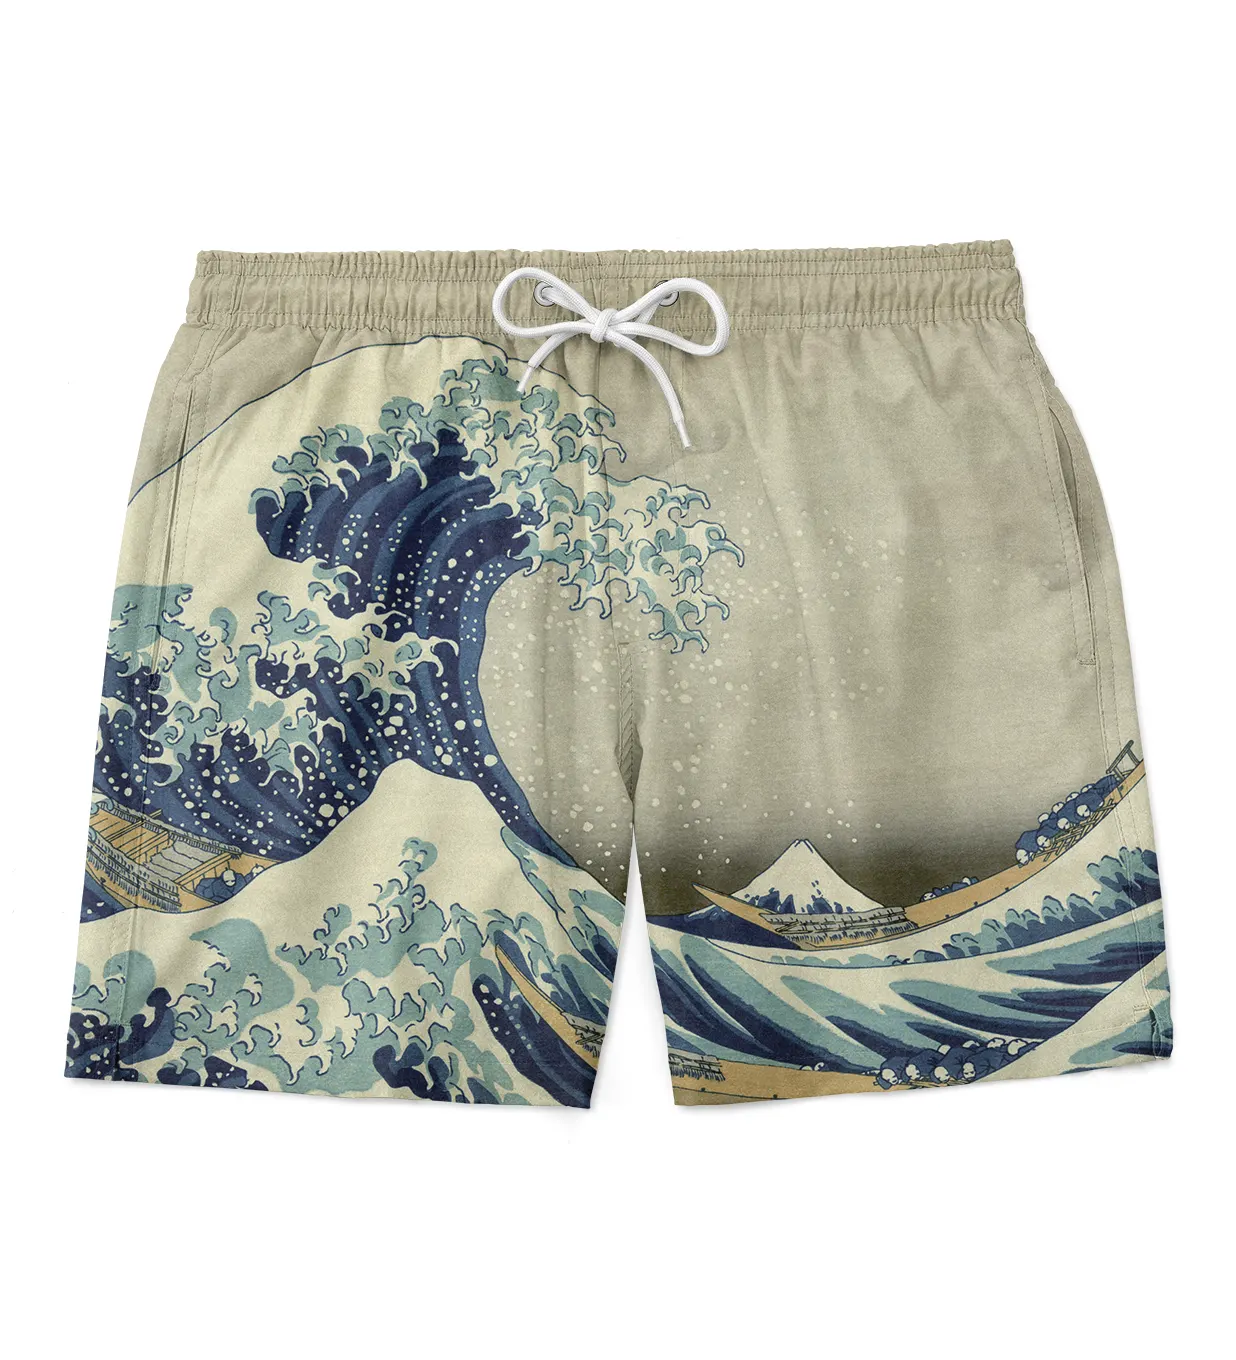 Louis Yellow Shorts - Quick Dry Swim Shorts for Men